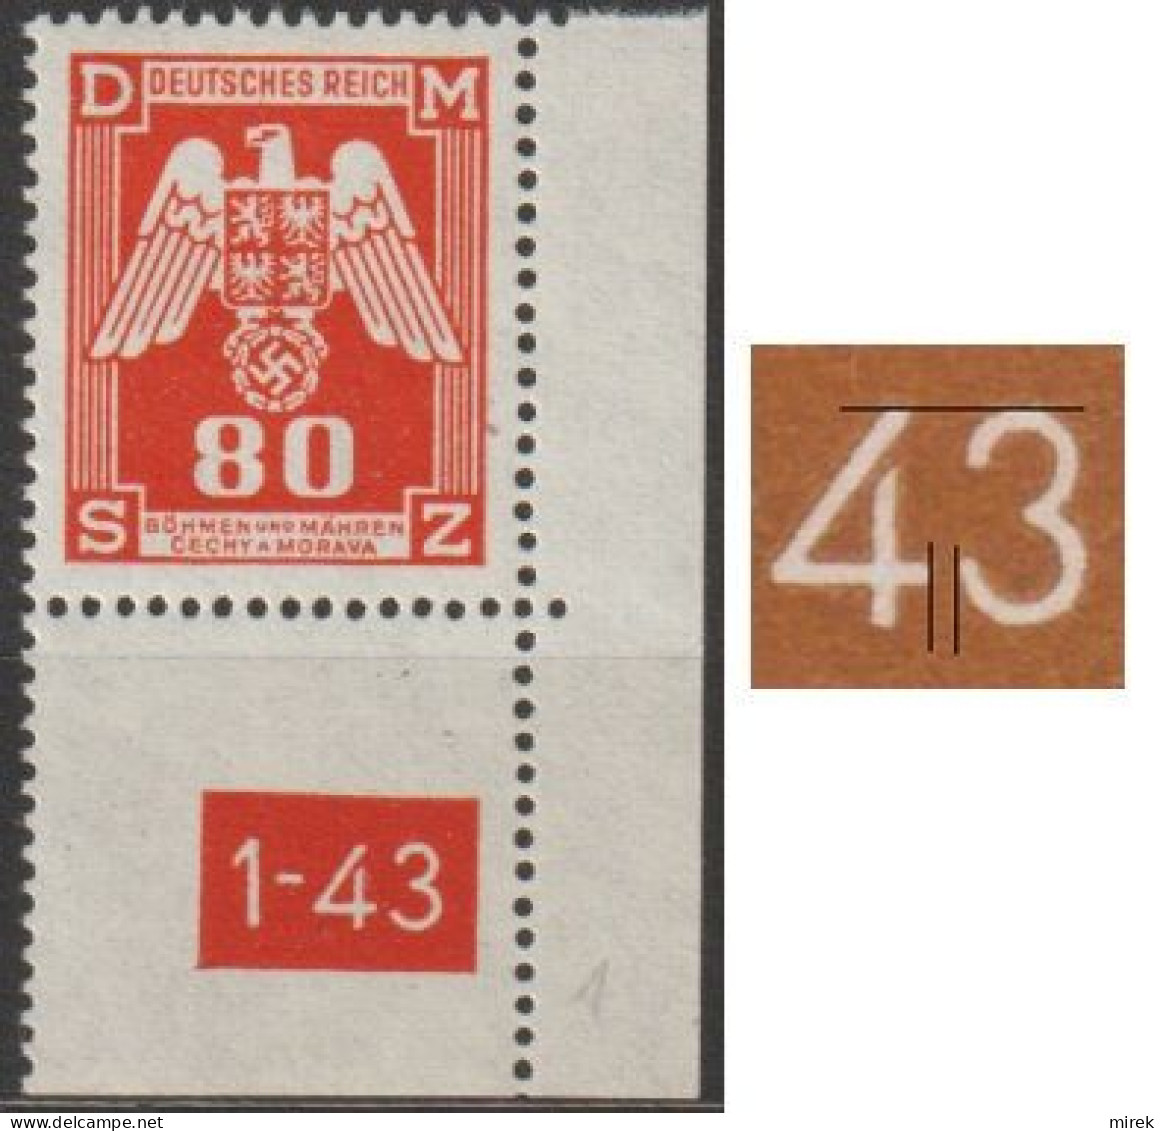 017/ Pof. SL 17, Corner Stamp, Plate Number 1-43, Type 1, Var. 1 - Neufs